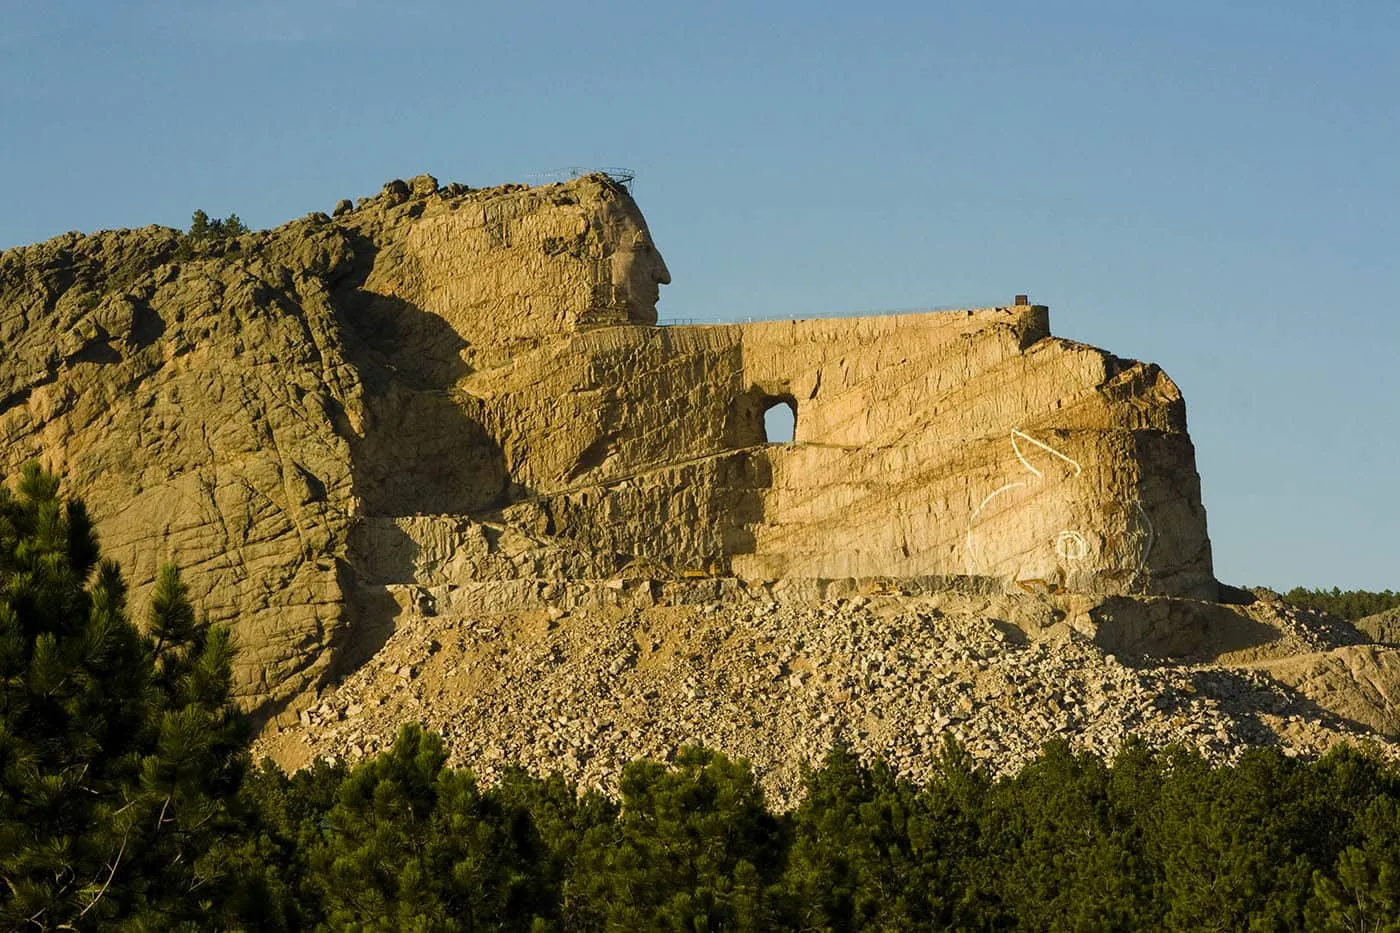 Chief Crazy Horse Memorial in Crazy Horse, South Dakota - Mount Rushmore Road Trip